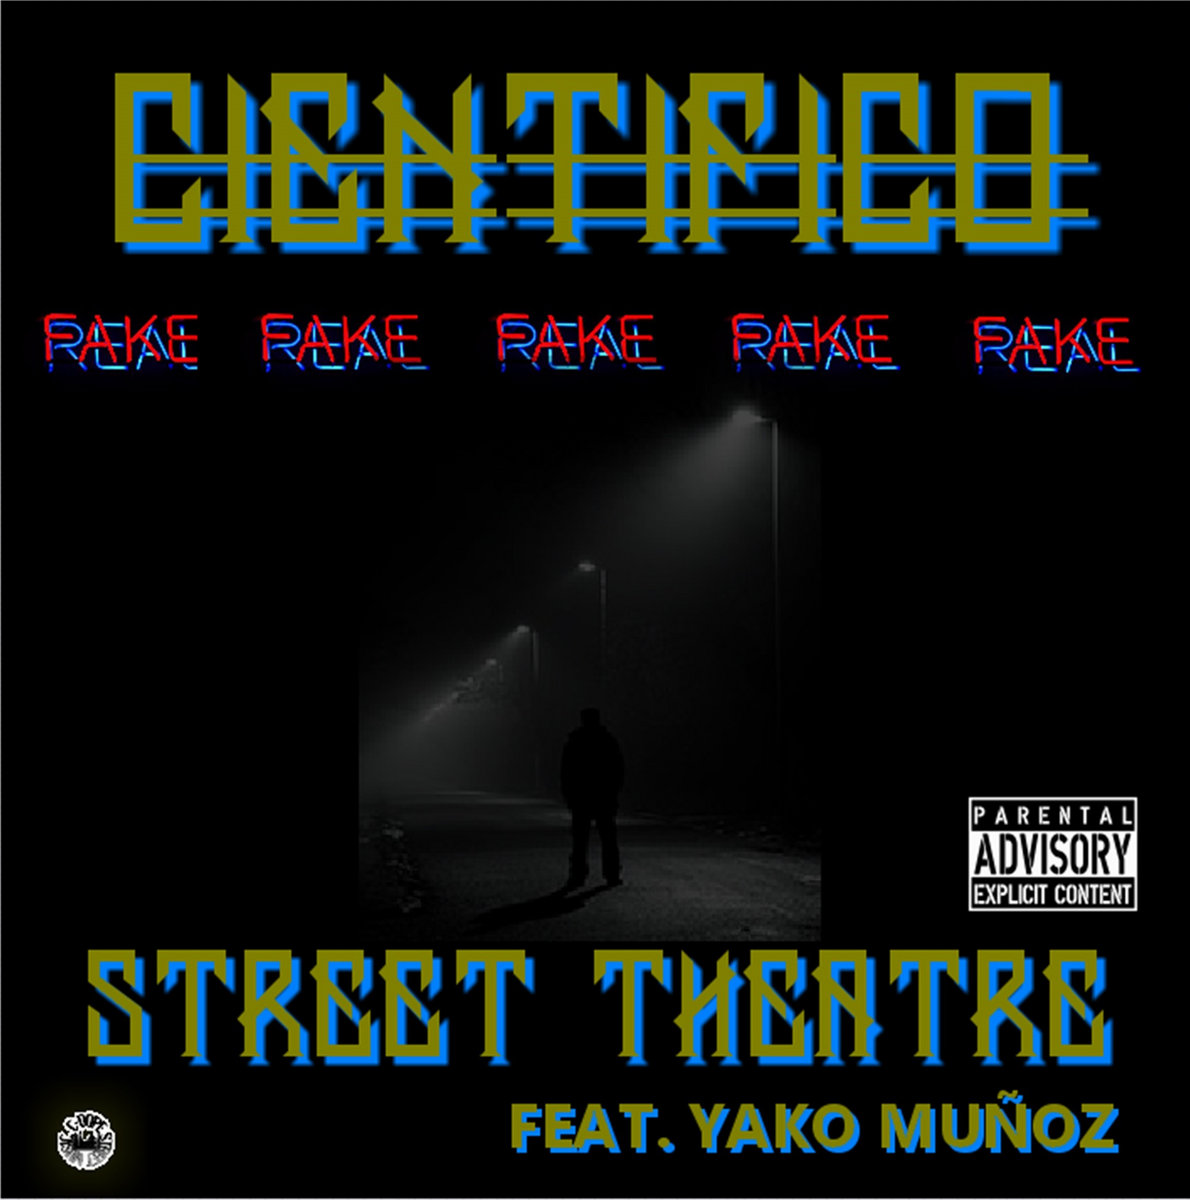 Cientifico_-_street_theatre_feat._yako_mu_oz